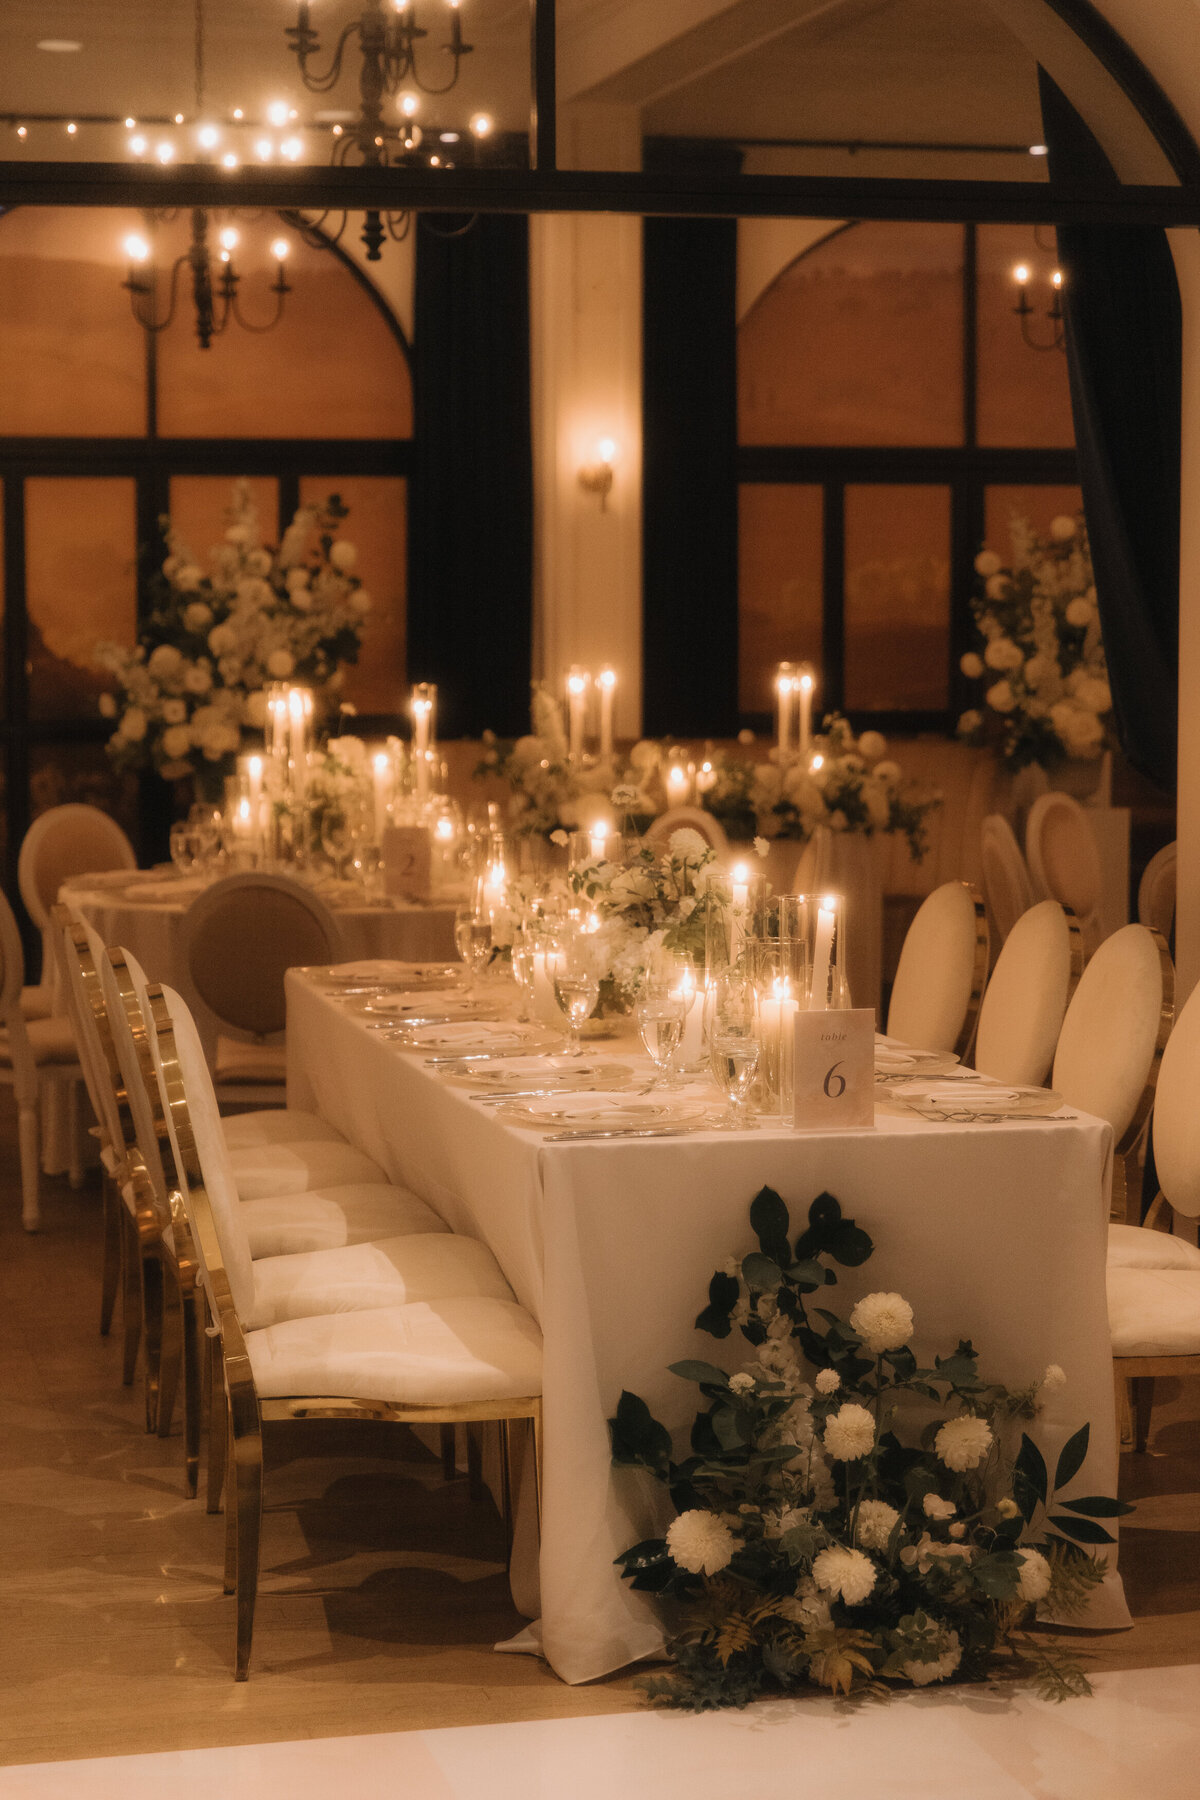 Atelier-Carmel-Wedding-Florist-GALLERY-Spaces-36